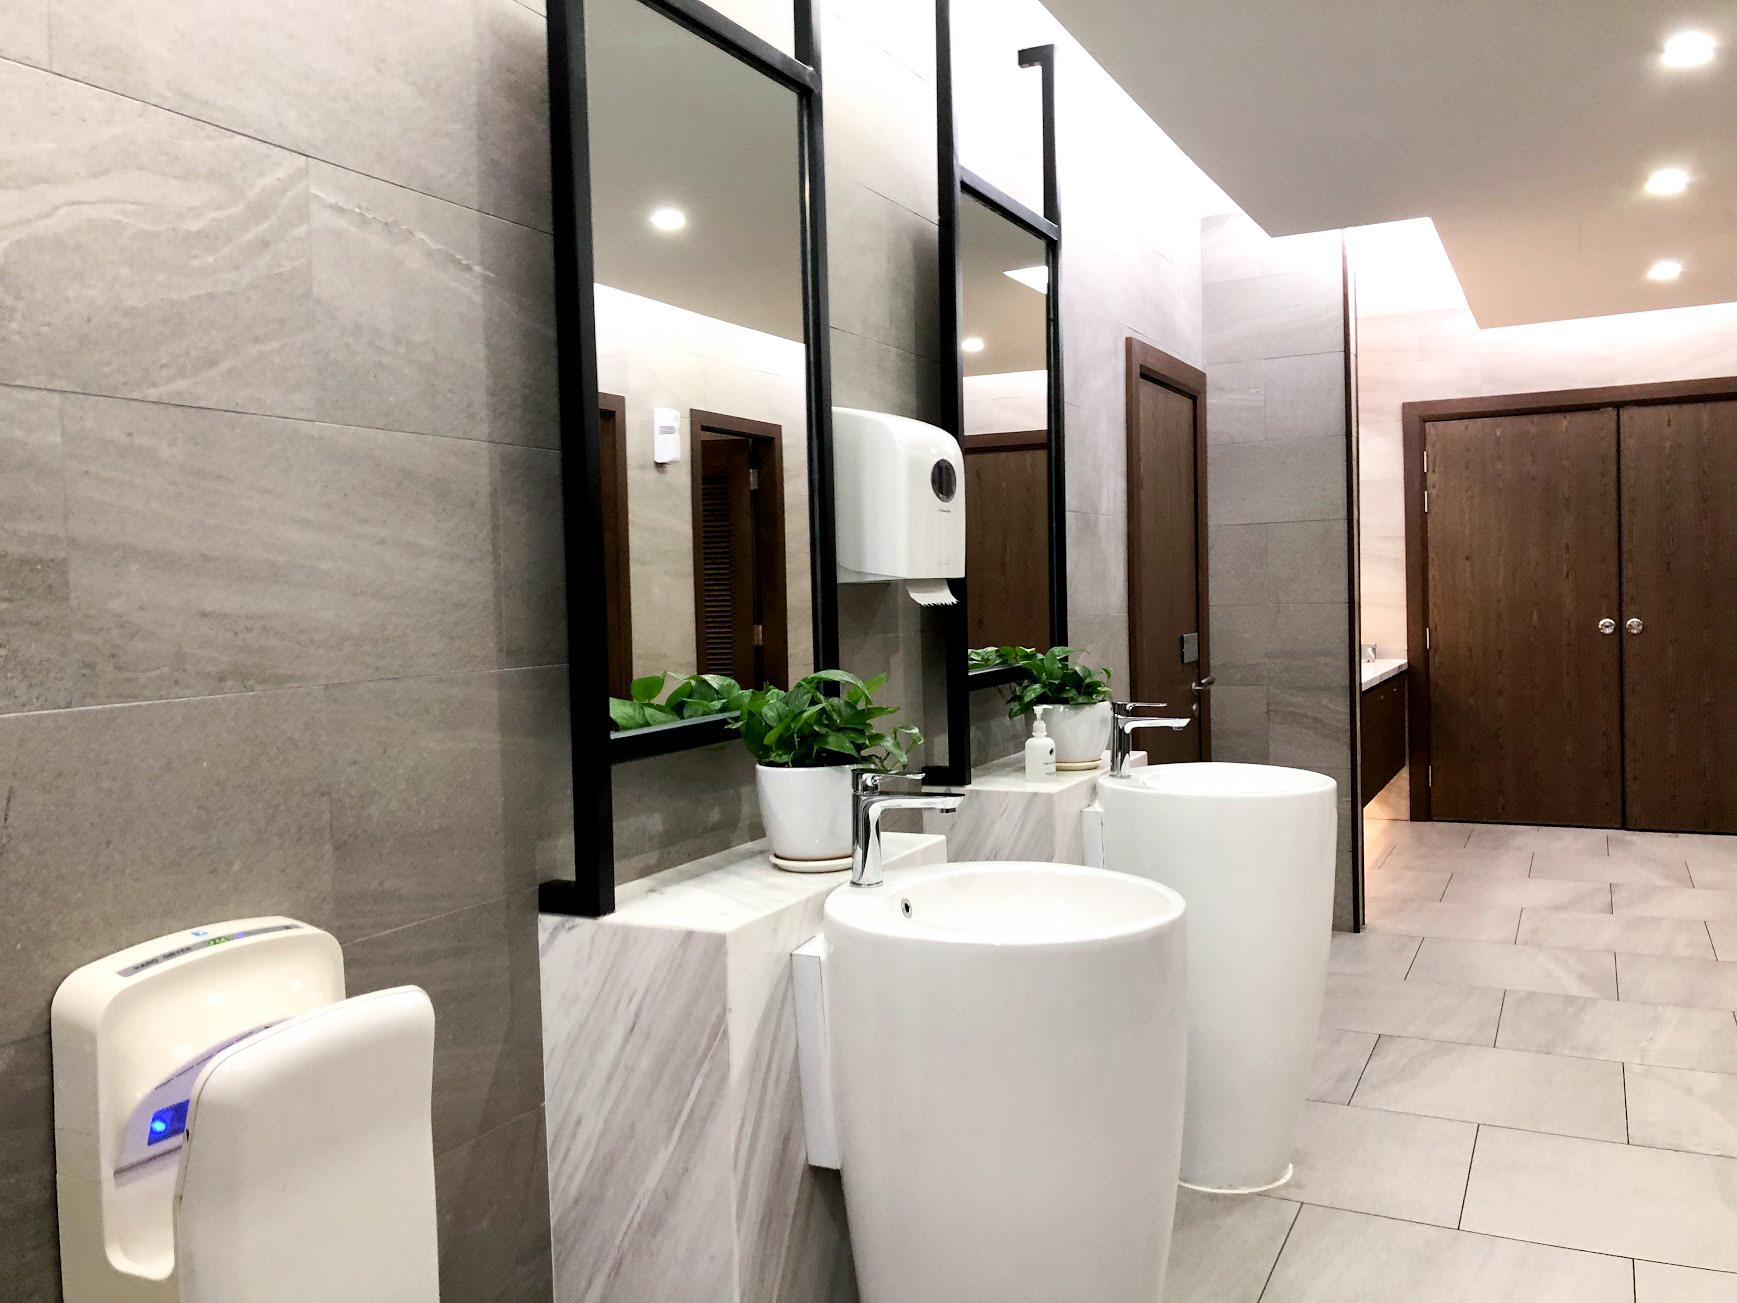 Malaysia Airlines Domestic Golden Lounge Kuala Lumpur bathroom